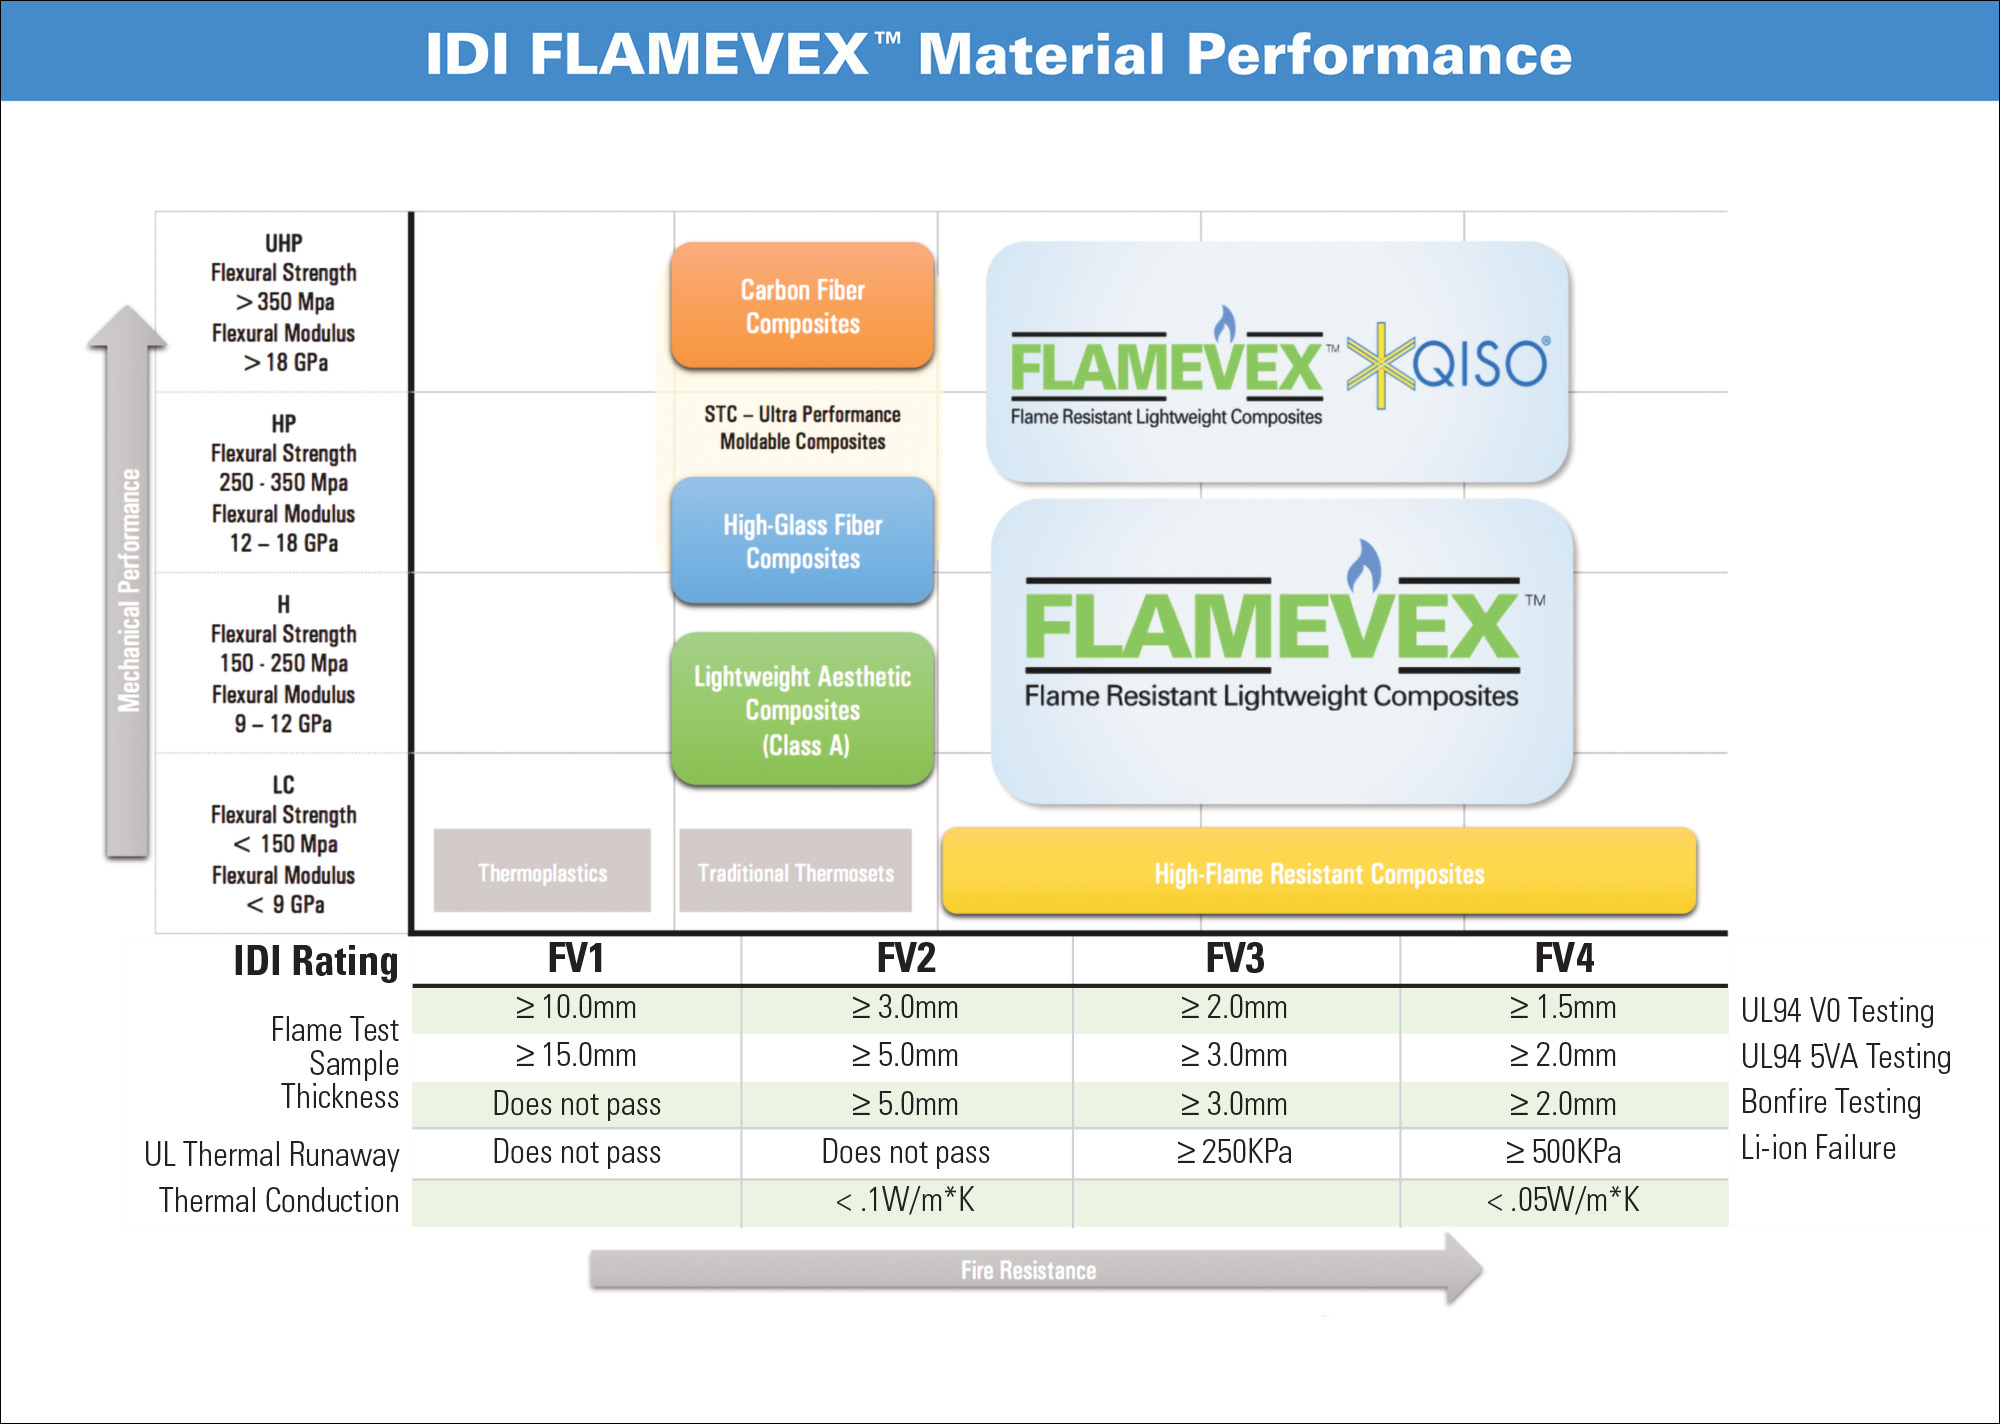 Flamevex Material Performance